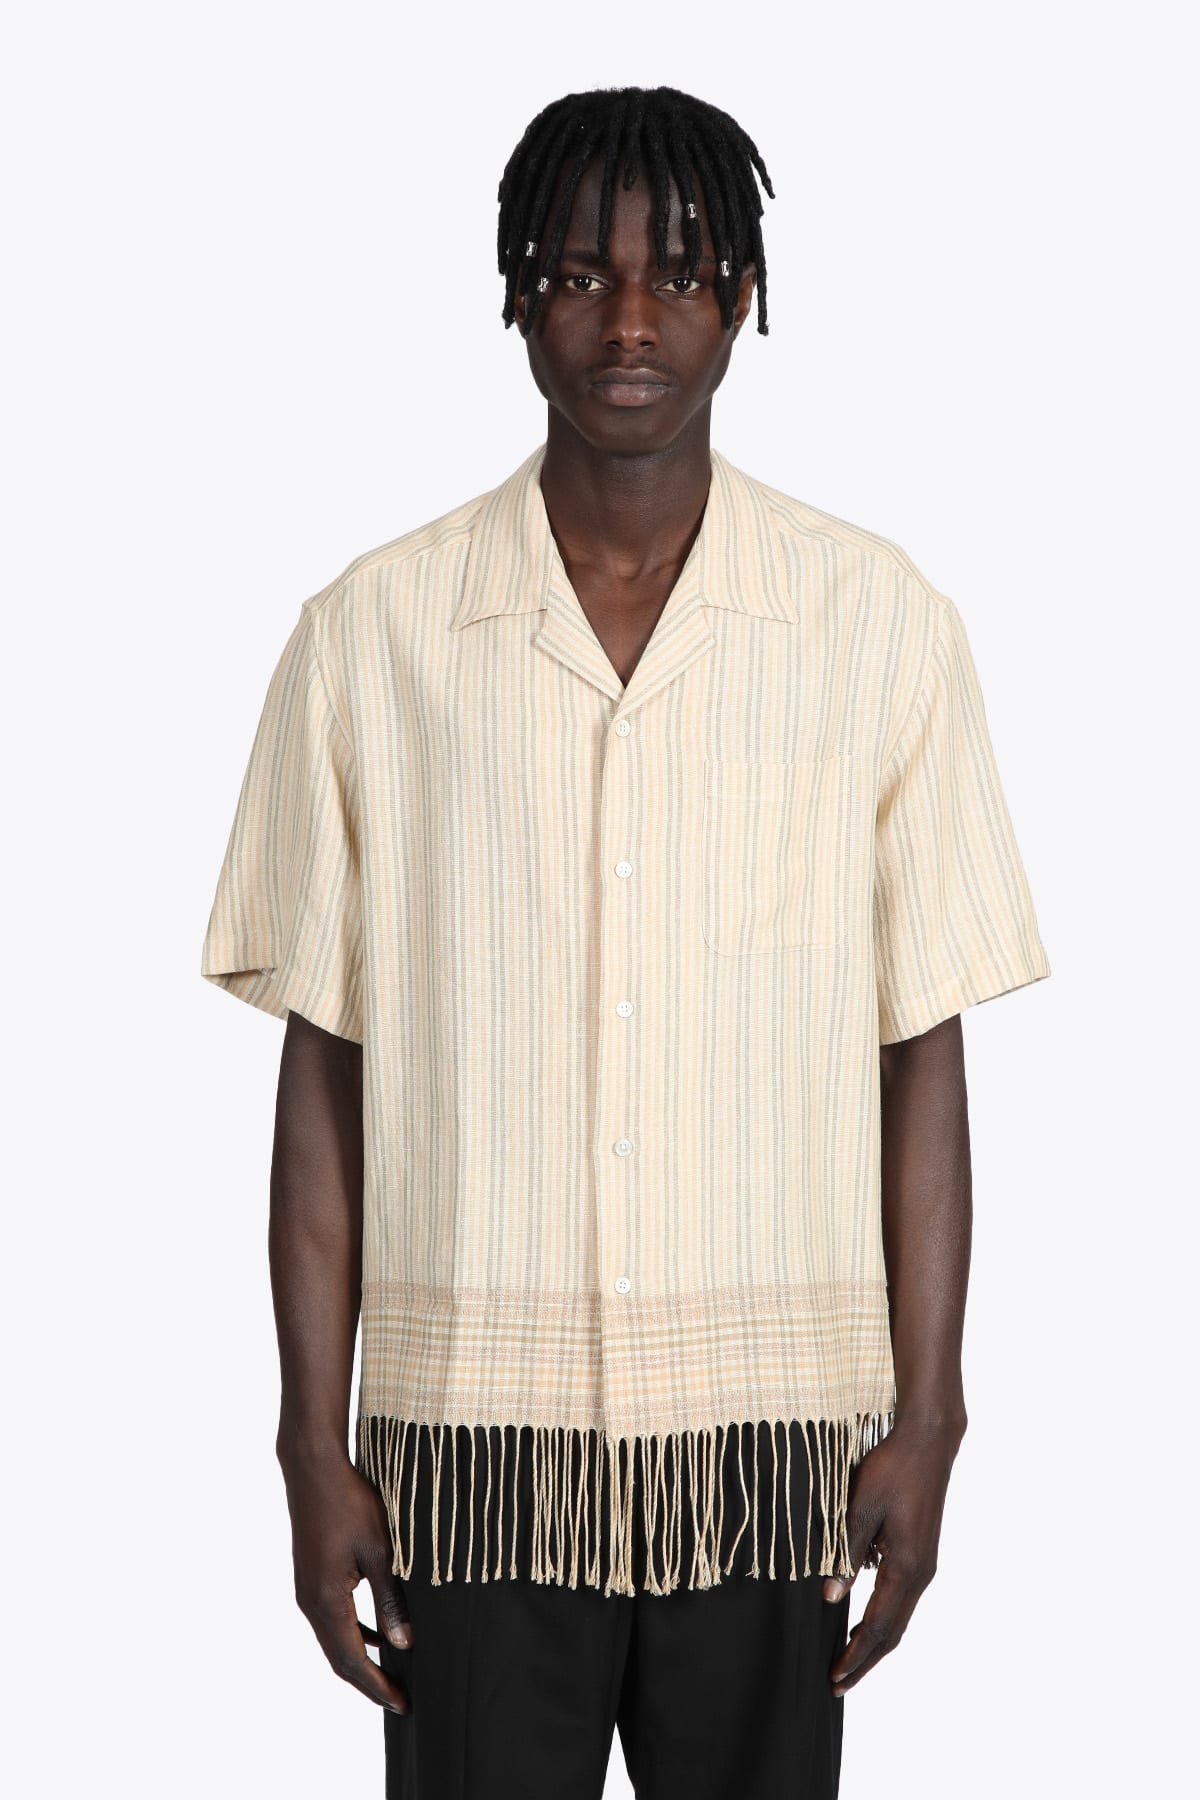 CMMN SWDN Short Sleeve Linen Camp Collar Shirt, Fringed Hem Striped beige linen shirt with fringed hem - Ture fringe